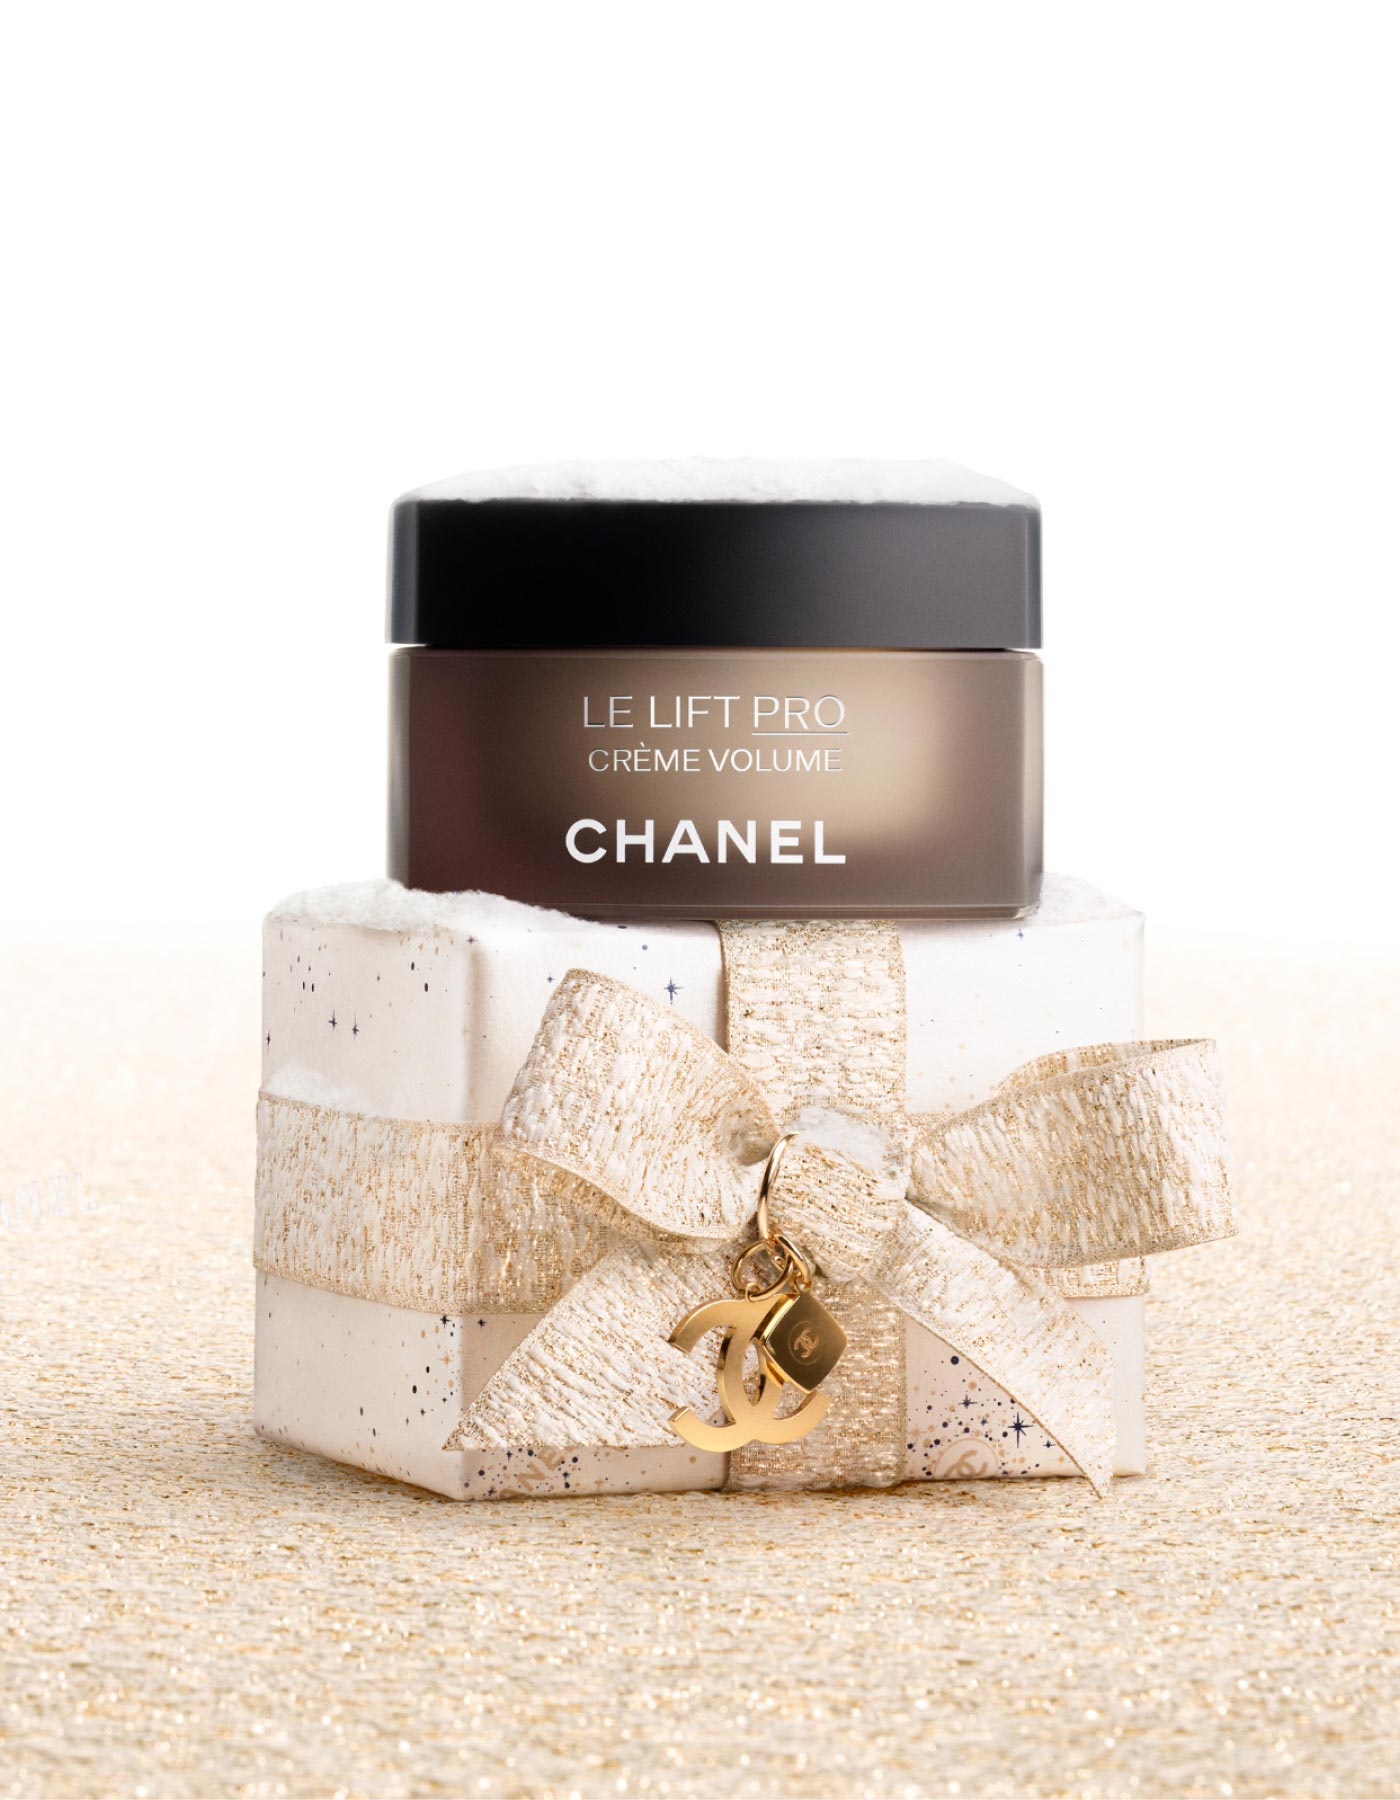 LE LIFT PRO CRÈME VOLUME: The perfect gift - Chanel